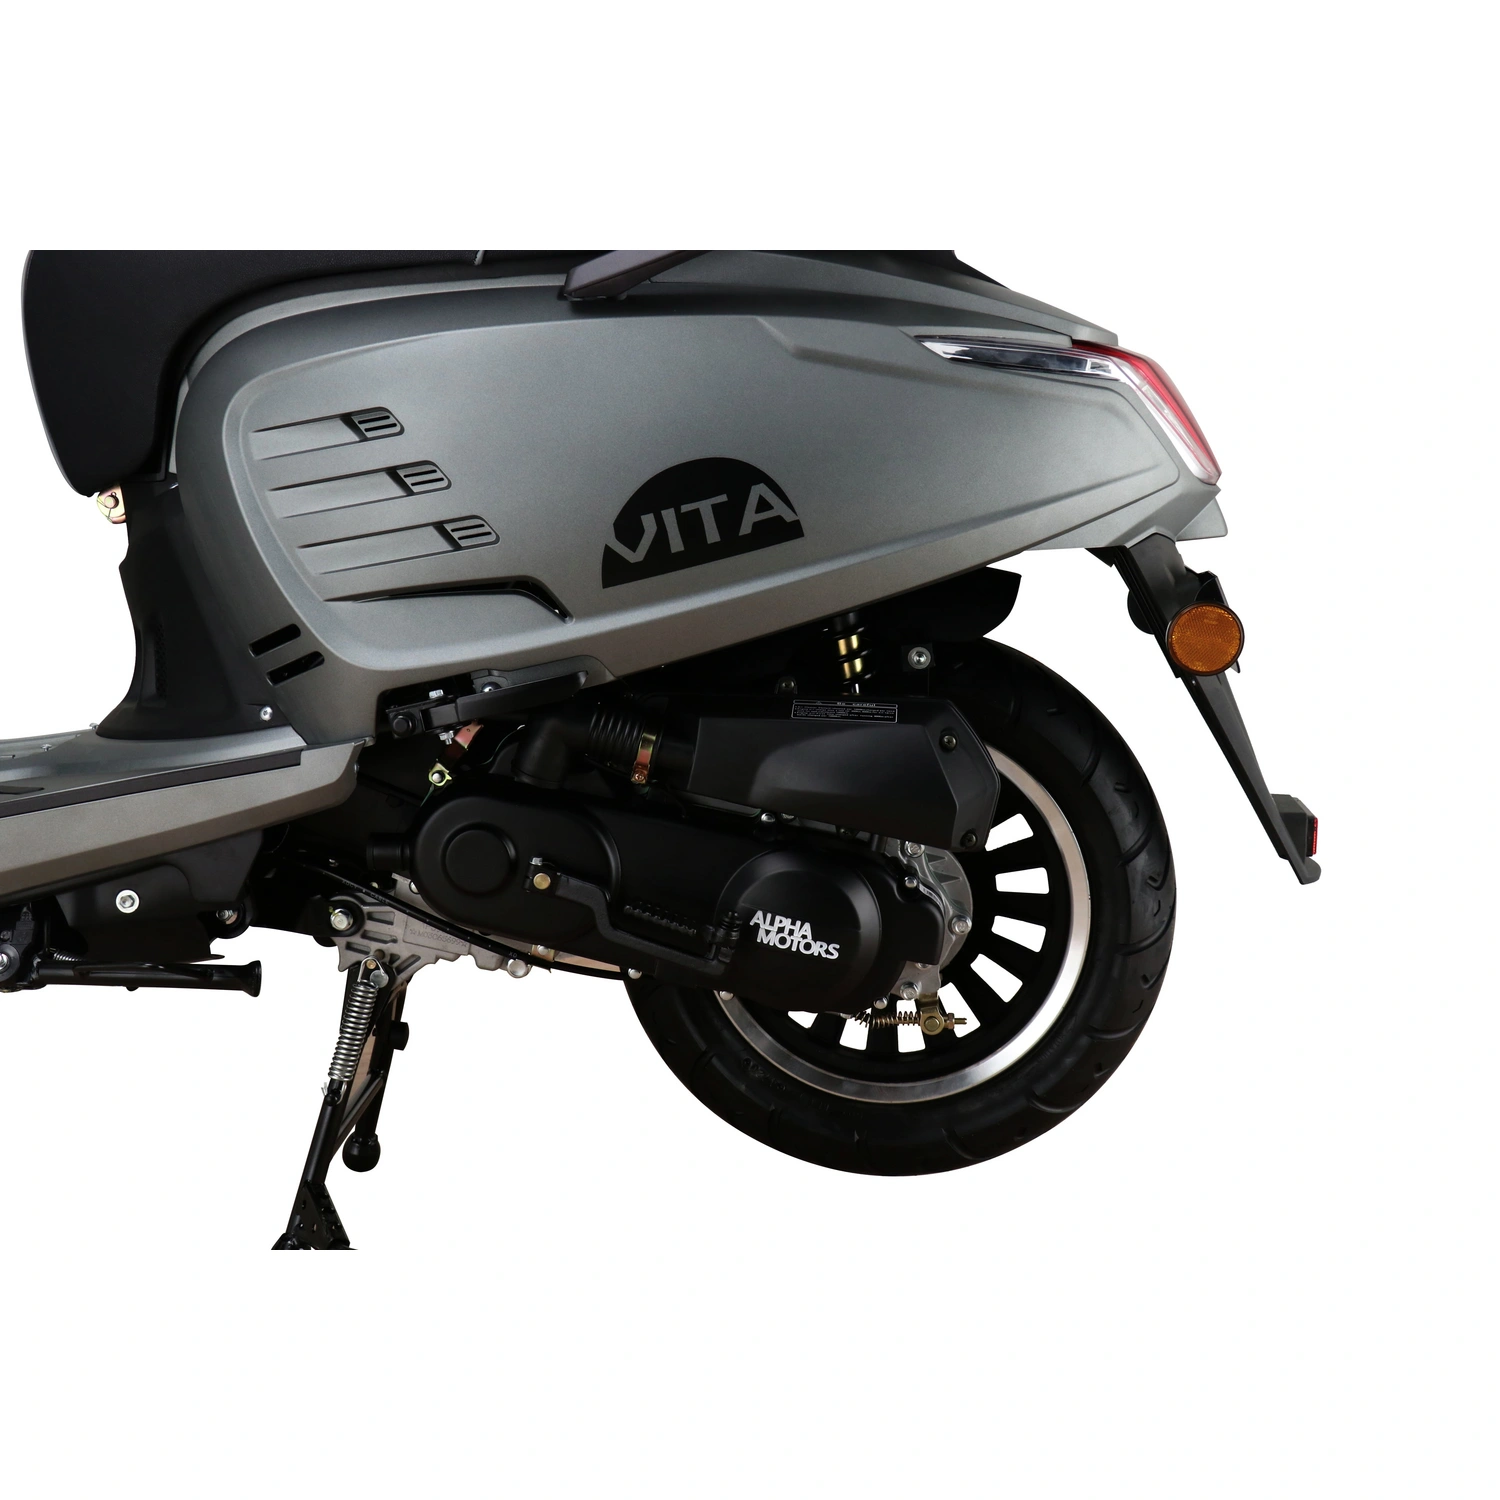 cm³, km/h, 85 125 Euro Motorroller 5 »Vita«, MOTORS ALPHA